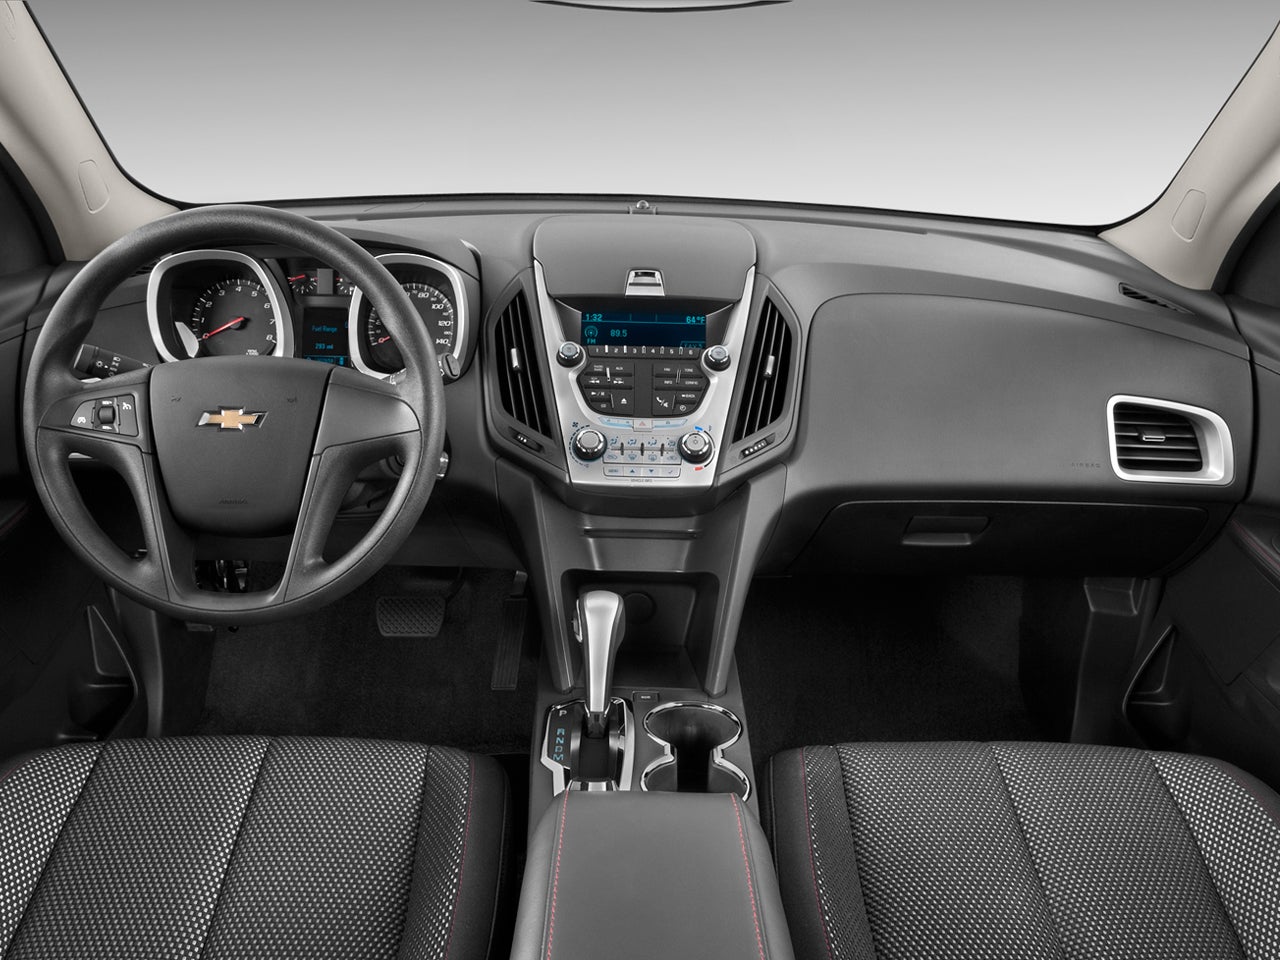 2010 Chevy Equinox on 2011 Chevrolet Equinox  Interior View  Manufacturer  Interior